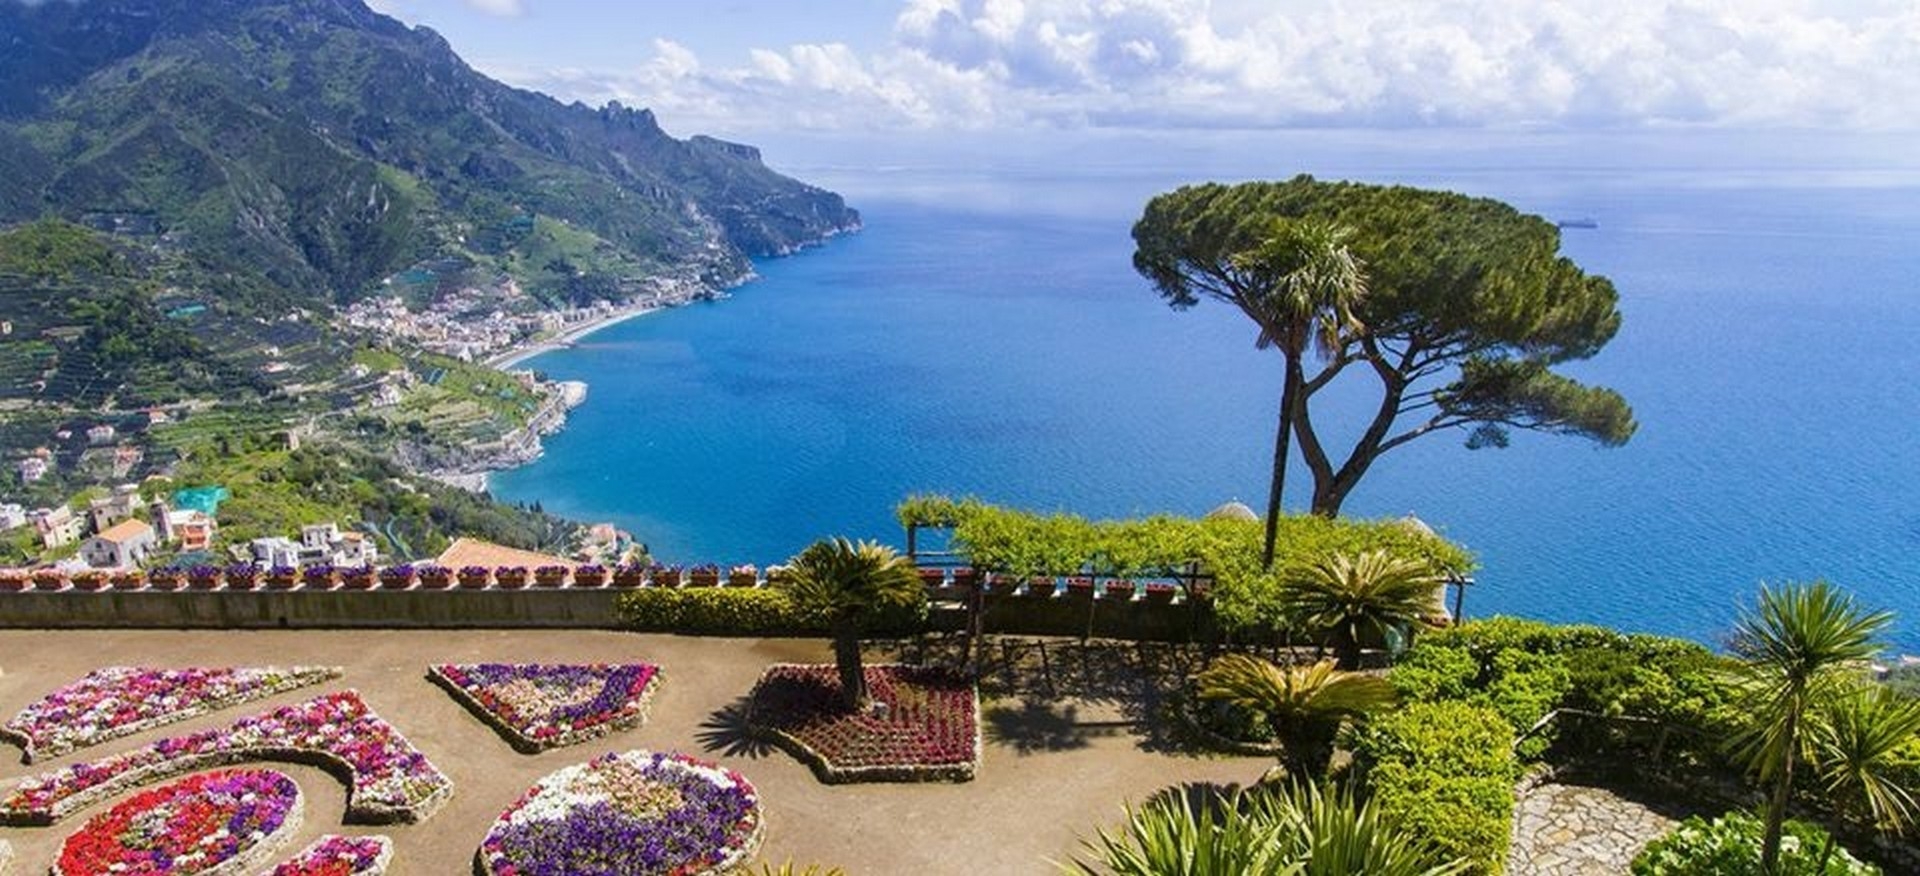 Amalfi Coast - Sorrento Maxi Tours